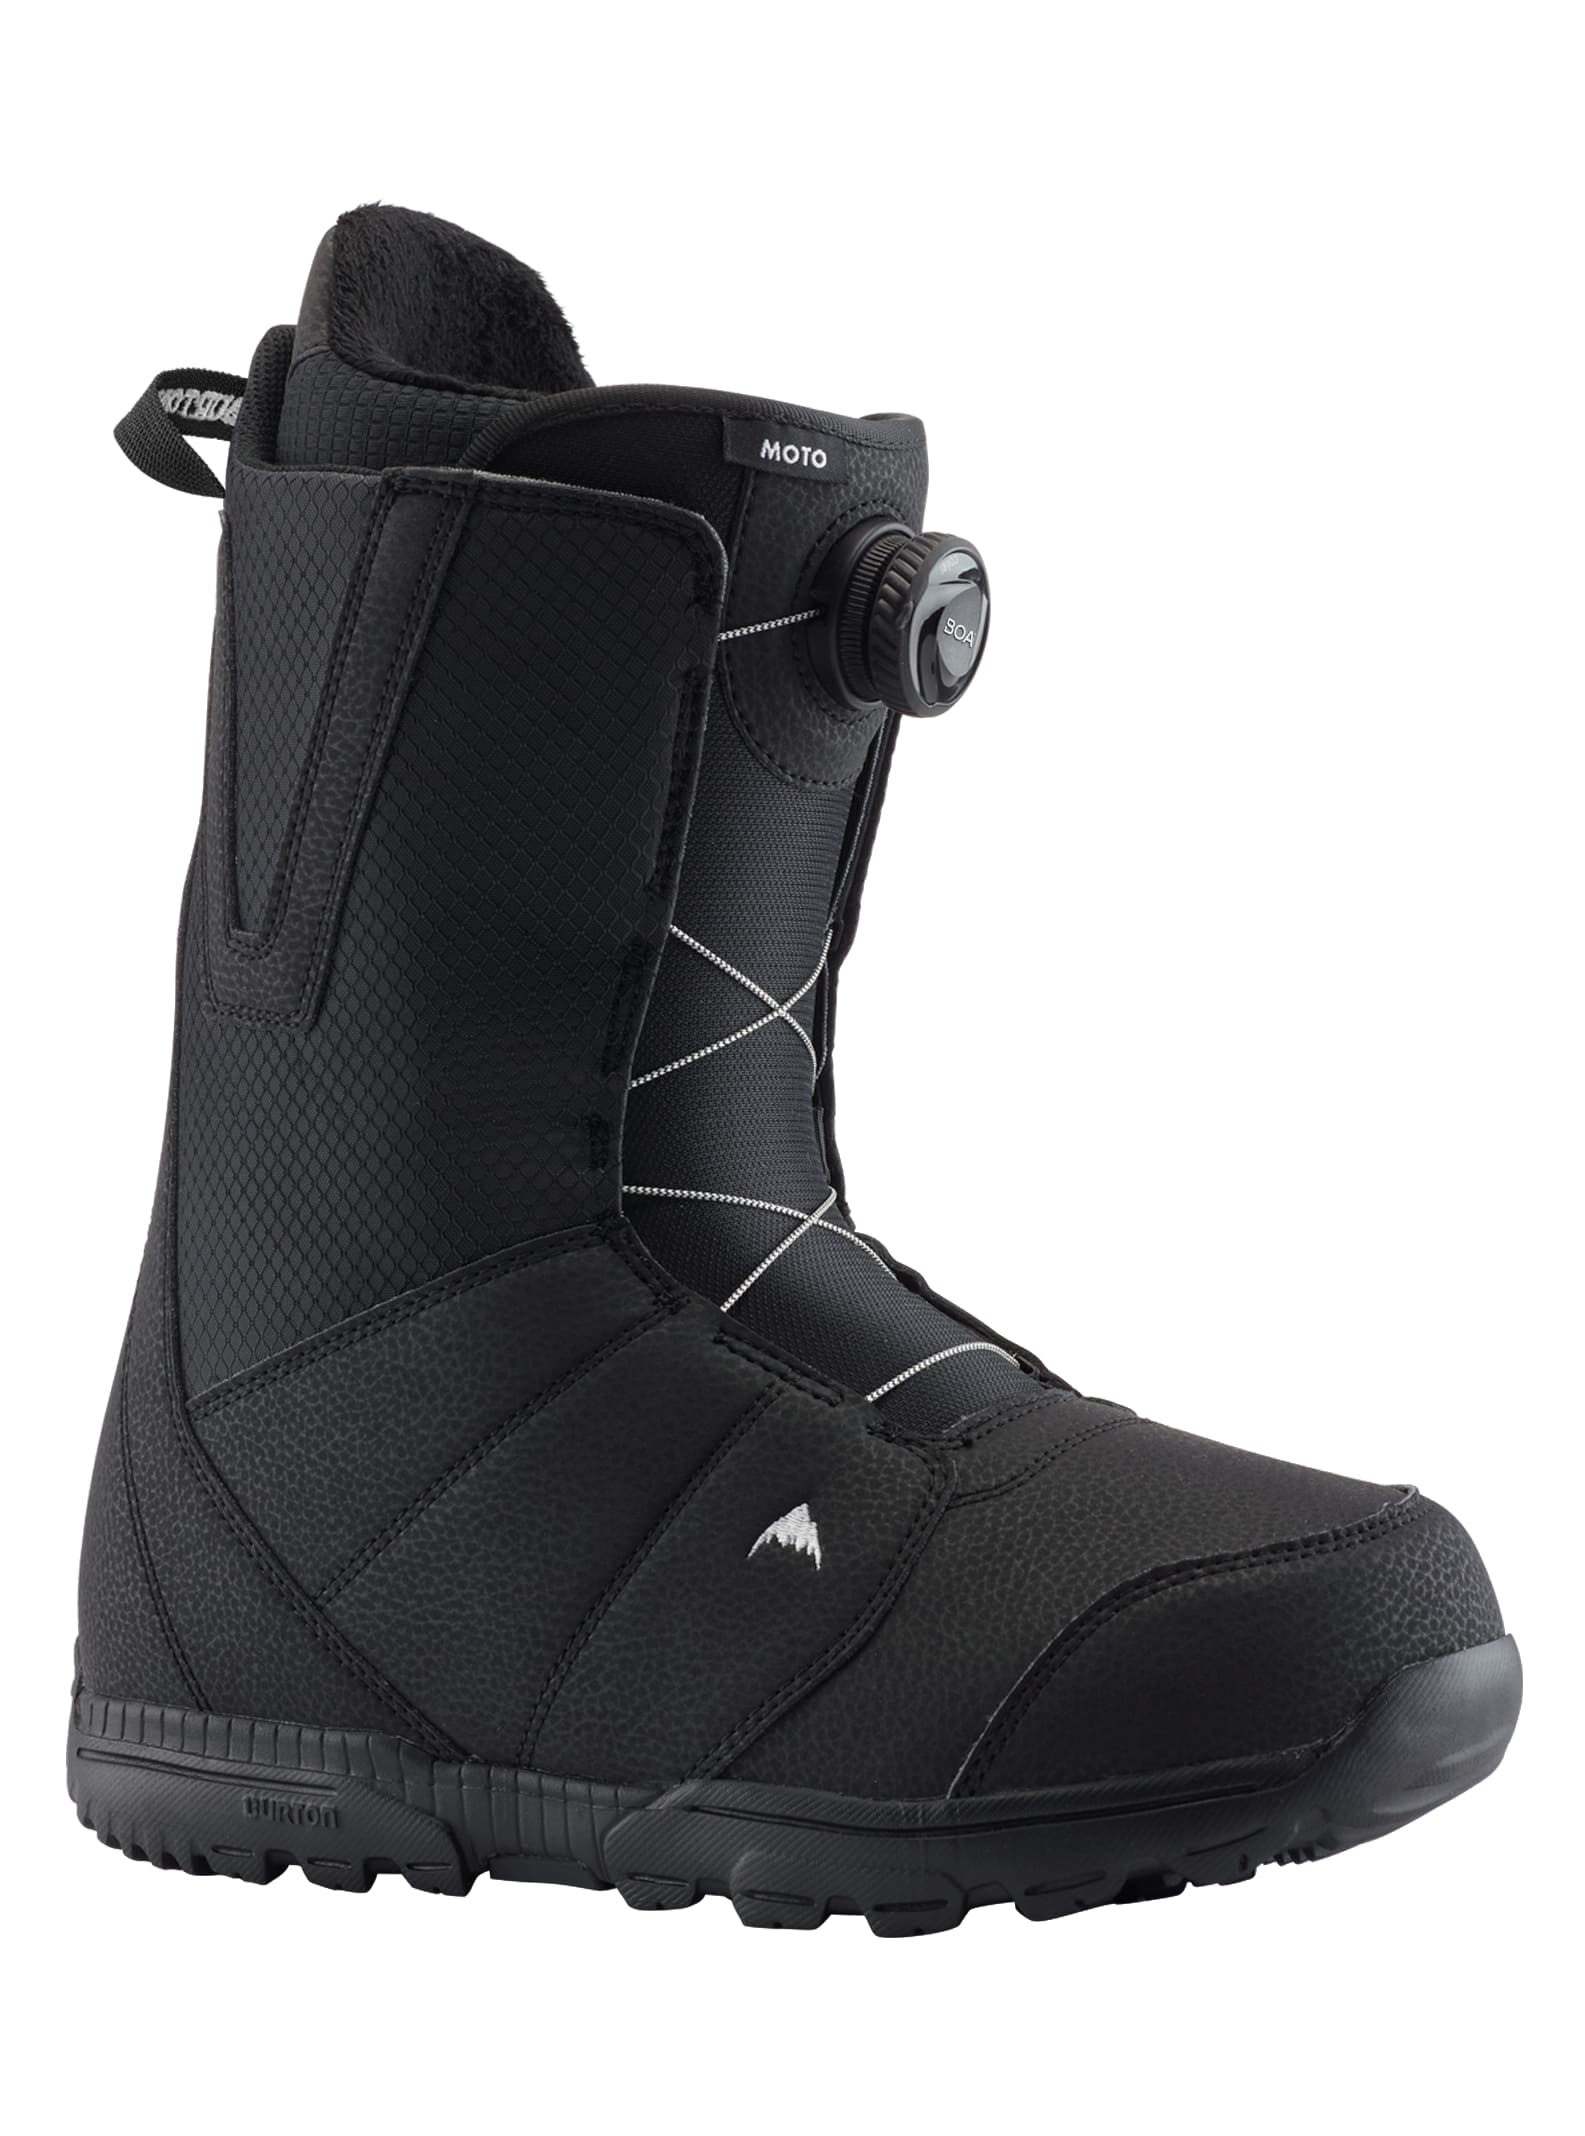 Men's Burton Moto BOA® Snowboard Boot